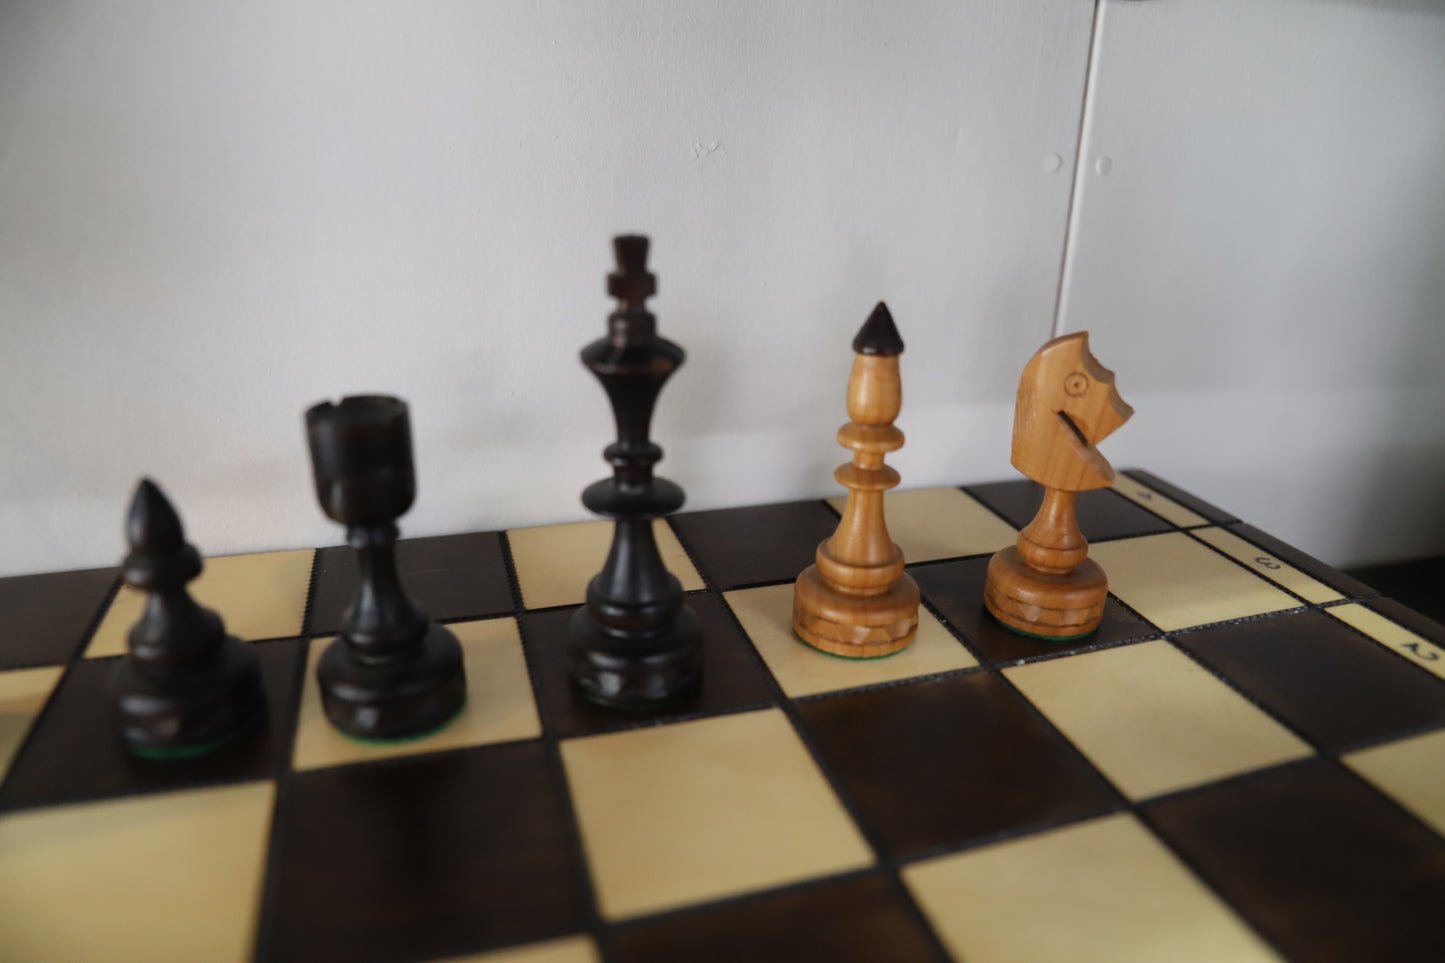 Czech Folding Chess Board